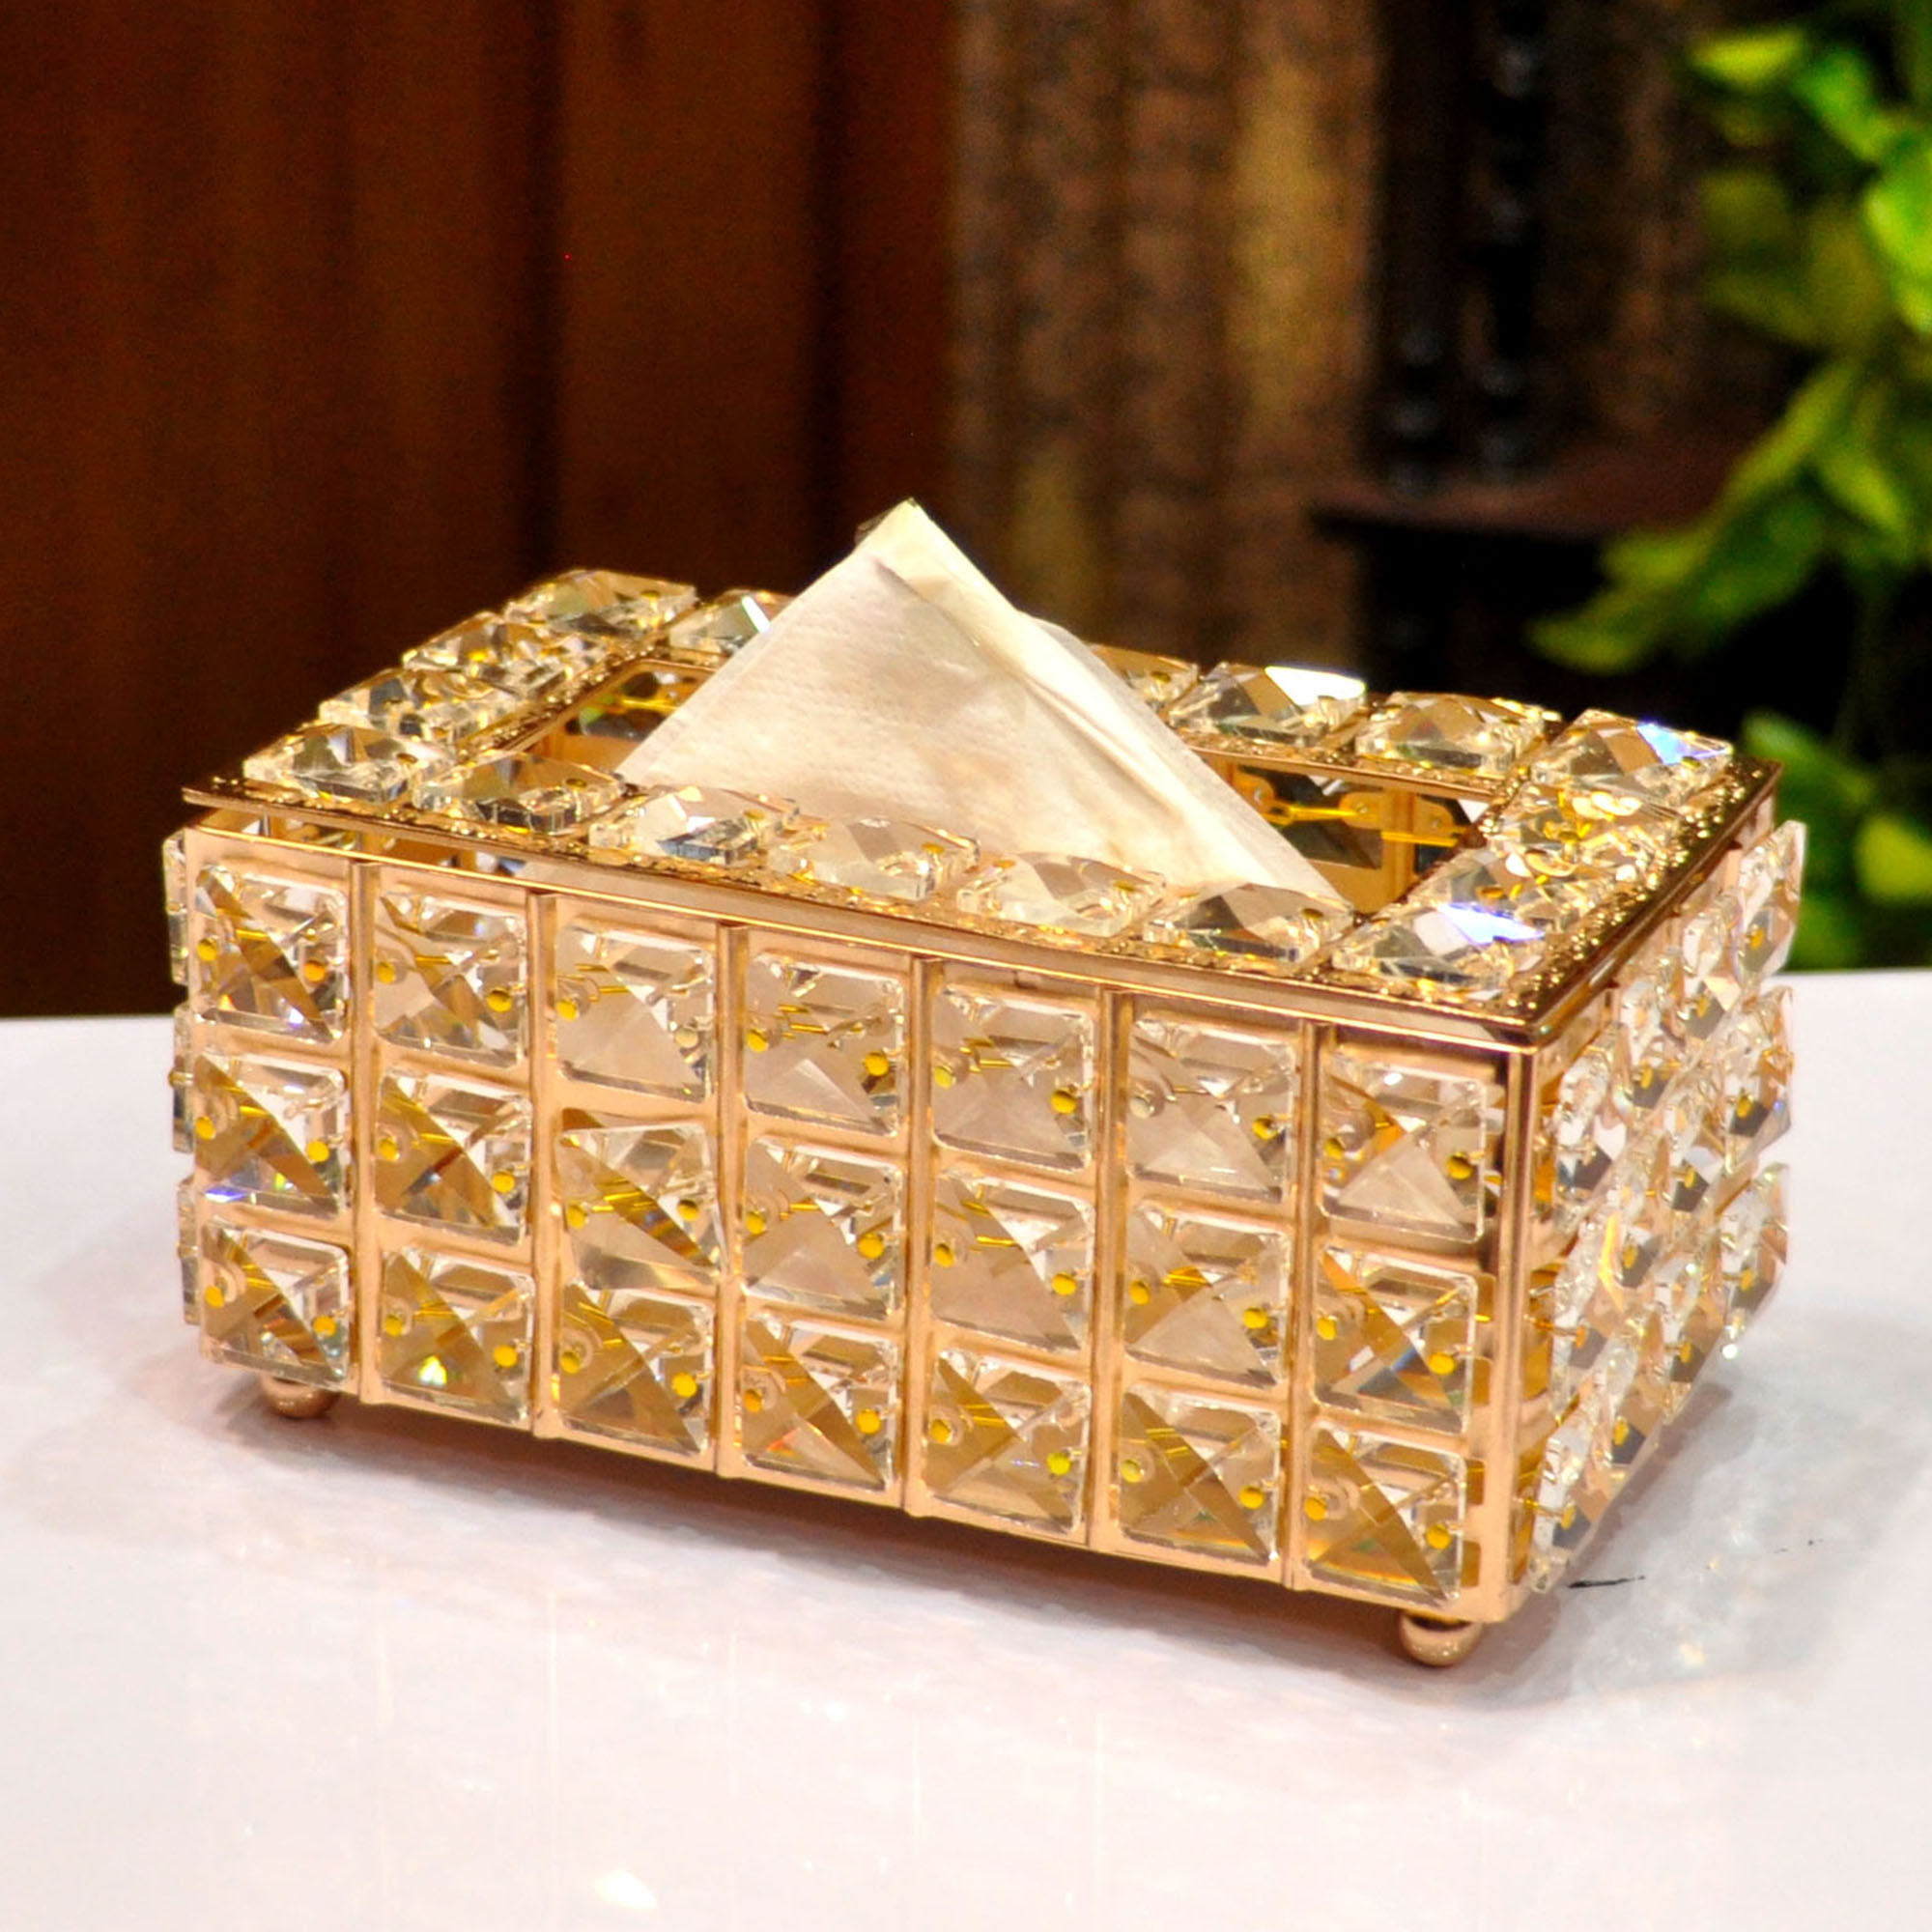 Crystal Tissue Box | Premium Tissue Box | Decorative Crystal Tissue Box | Luxury Style Tissue Box